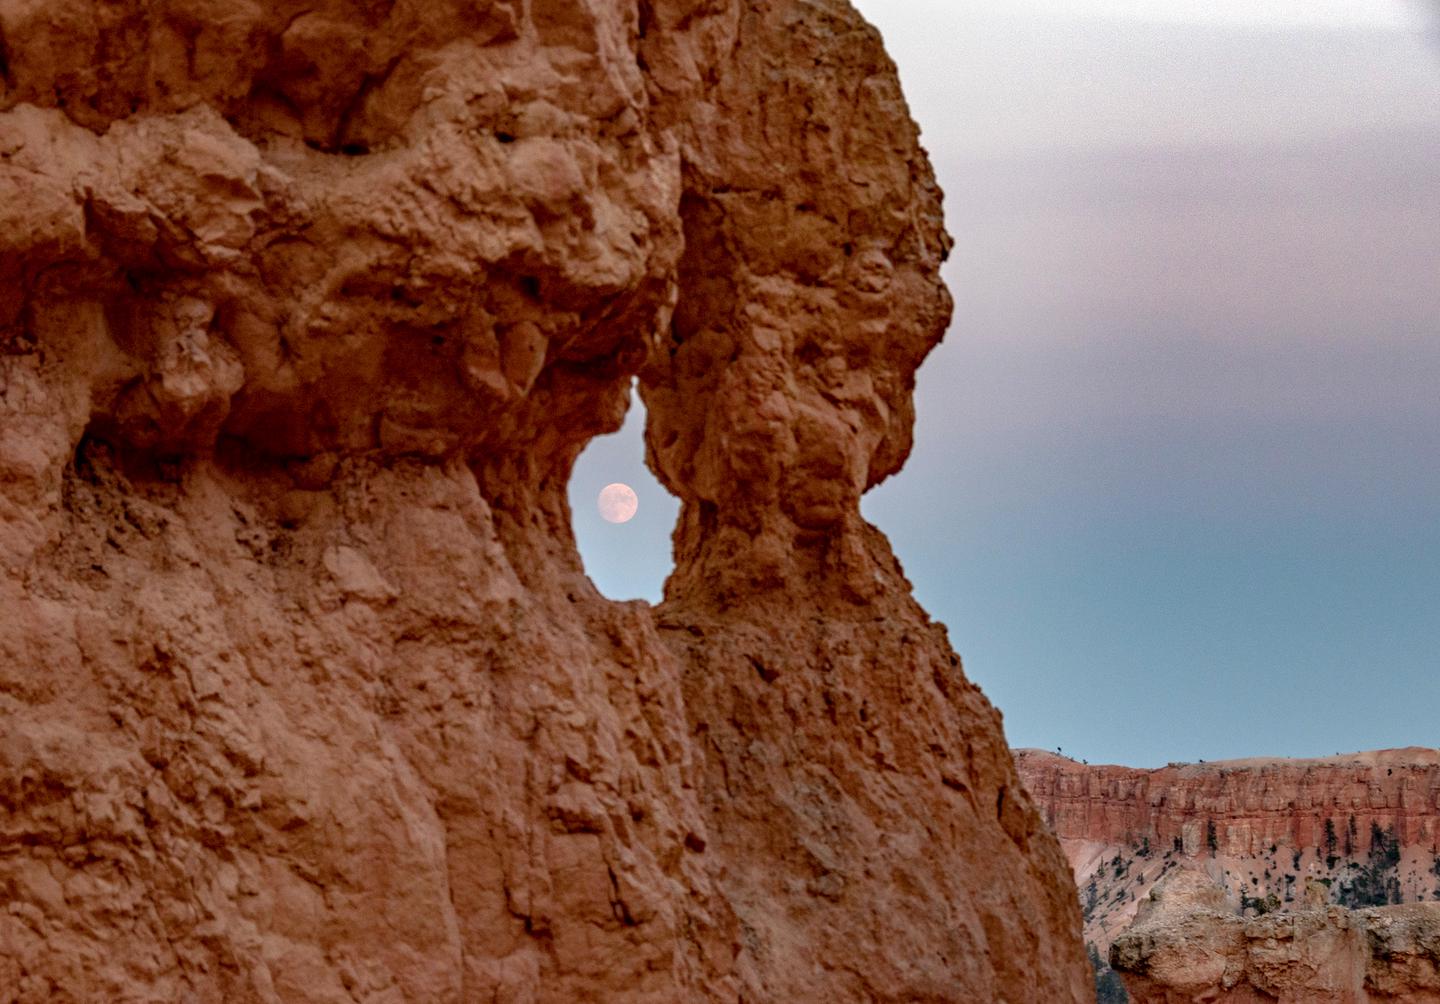 Full Moon RiseFull Moon through rock window